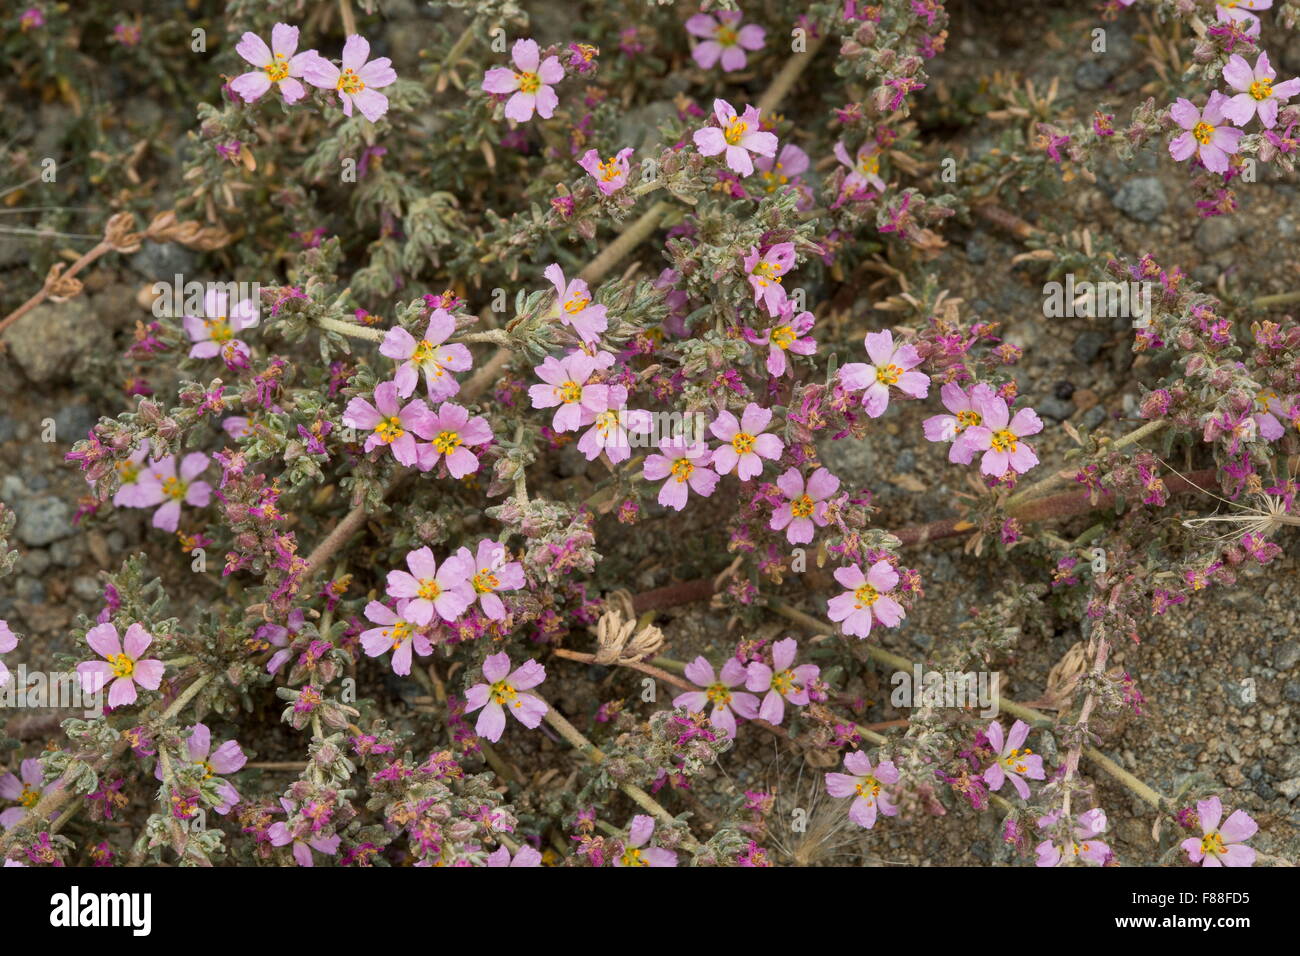 Sea heath, Frankenia laevis in flower in damp saline soil. Stock Photo